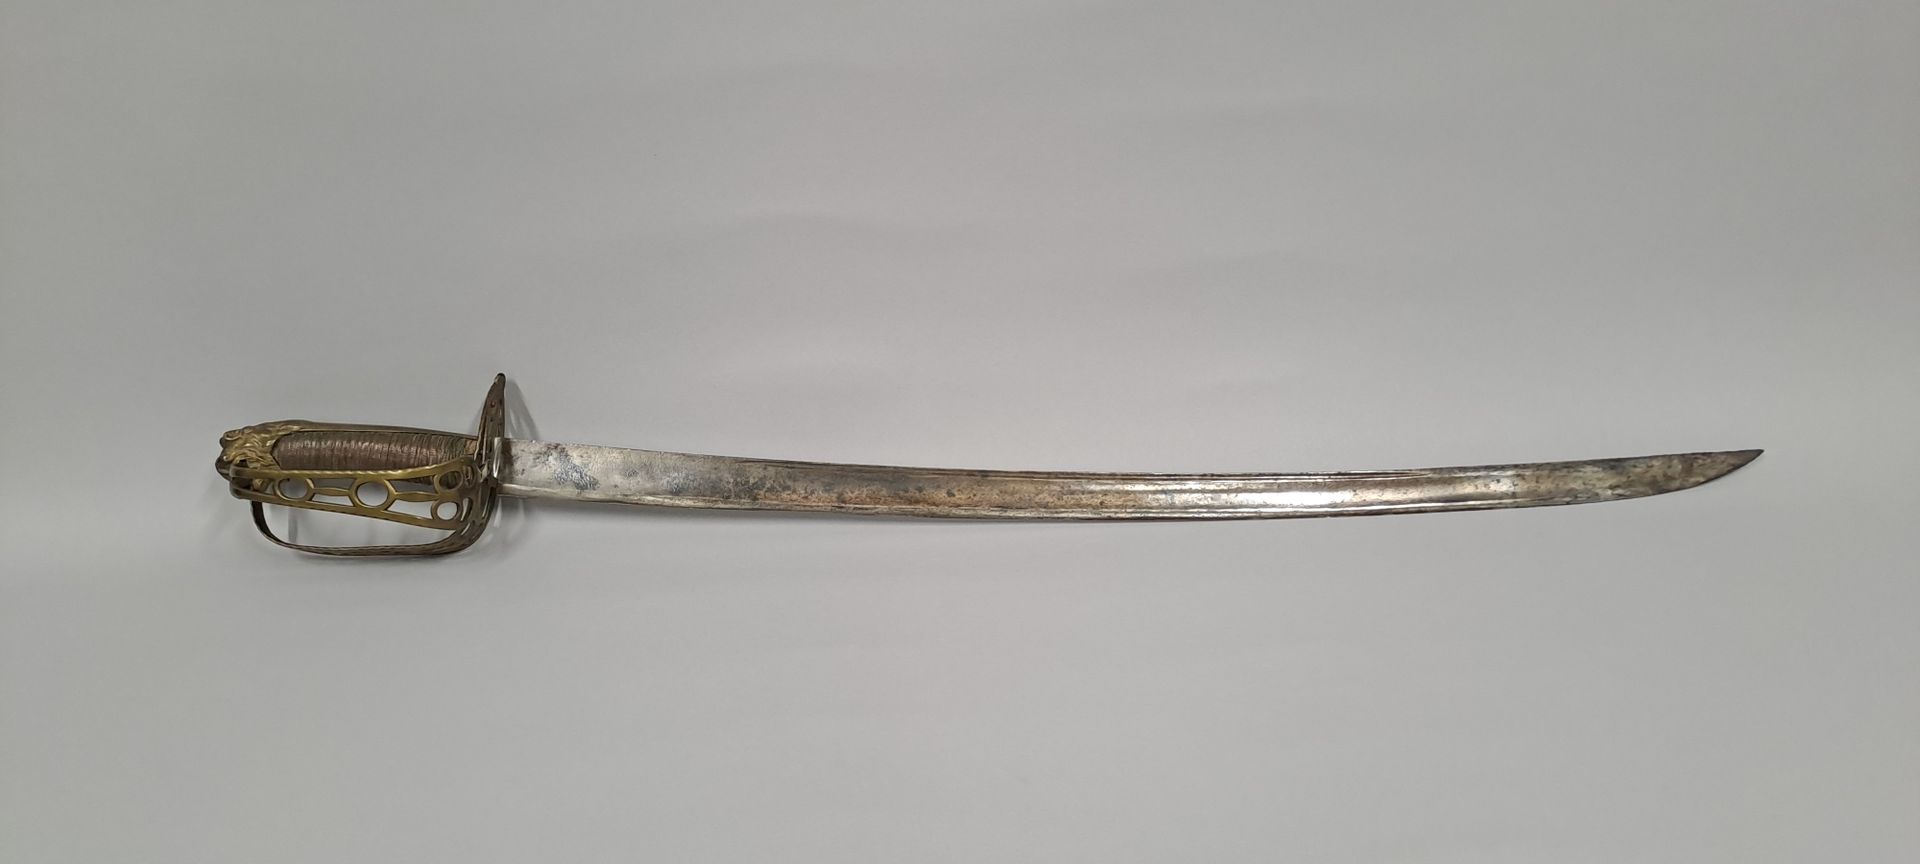 Null 志愿军军官的军刀。青铜 "旋转护手"。鞍座上有狮子头和花纹导火线（小缺）。
弯曲的刀身，上面有一个凹槽（点蚀）。
冯绍峰。
18世纪晚期